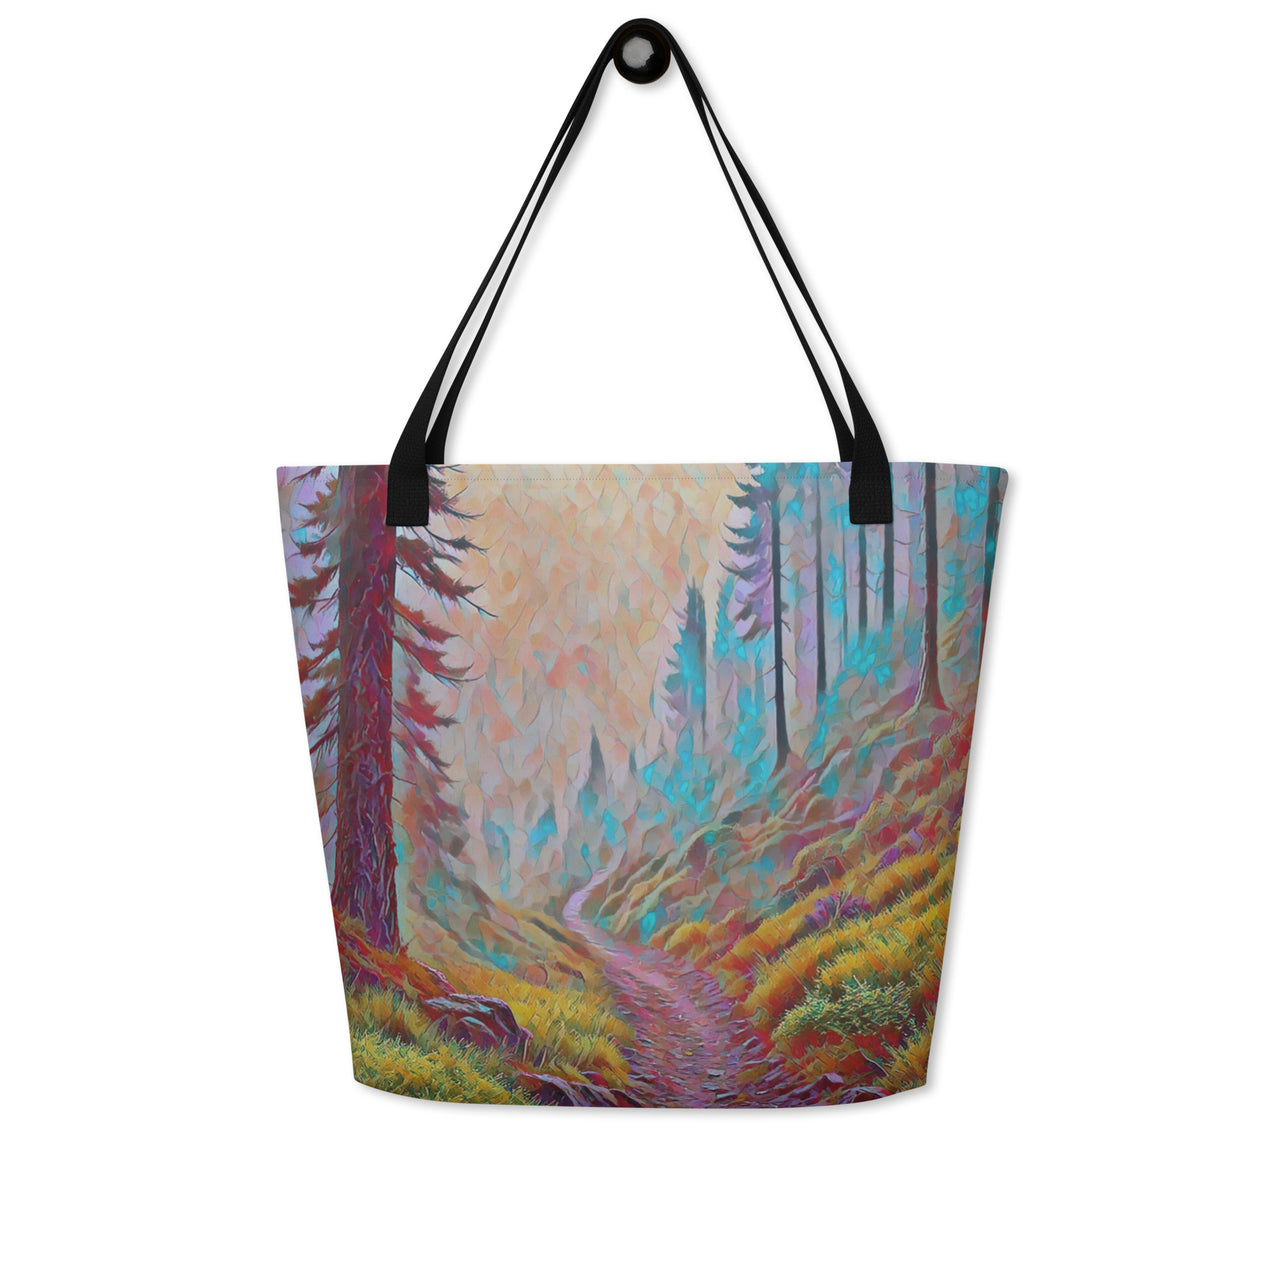 Oregon Back Trail - Digital Art - Large 16x20 Tote Bag W/Pocket